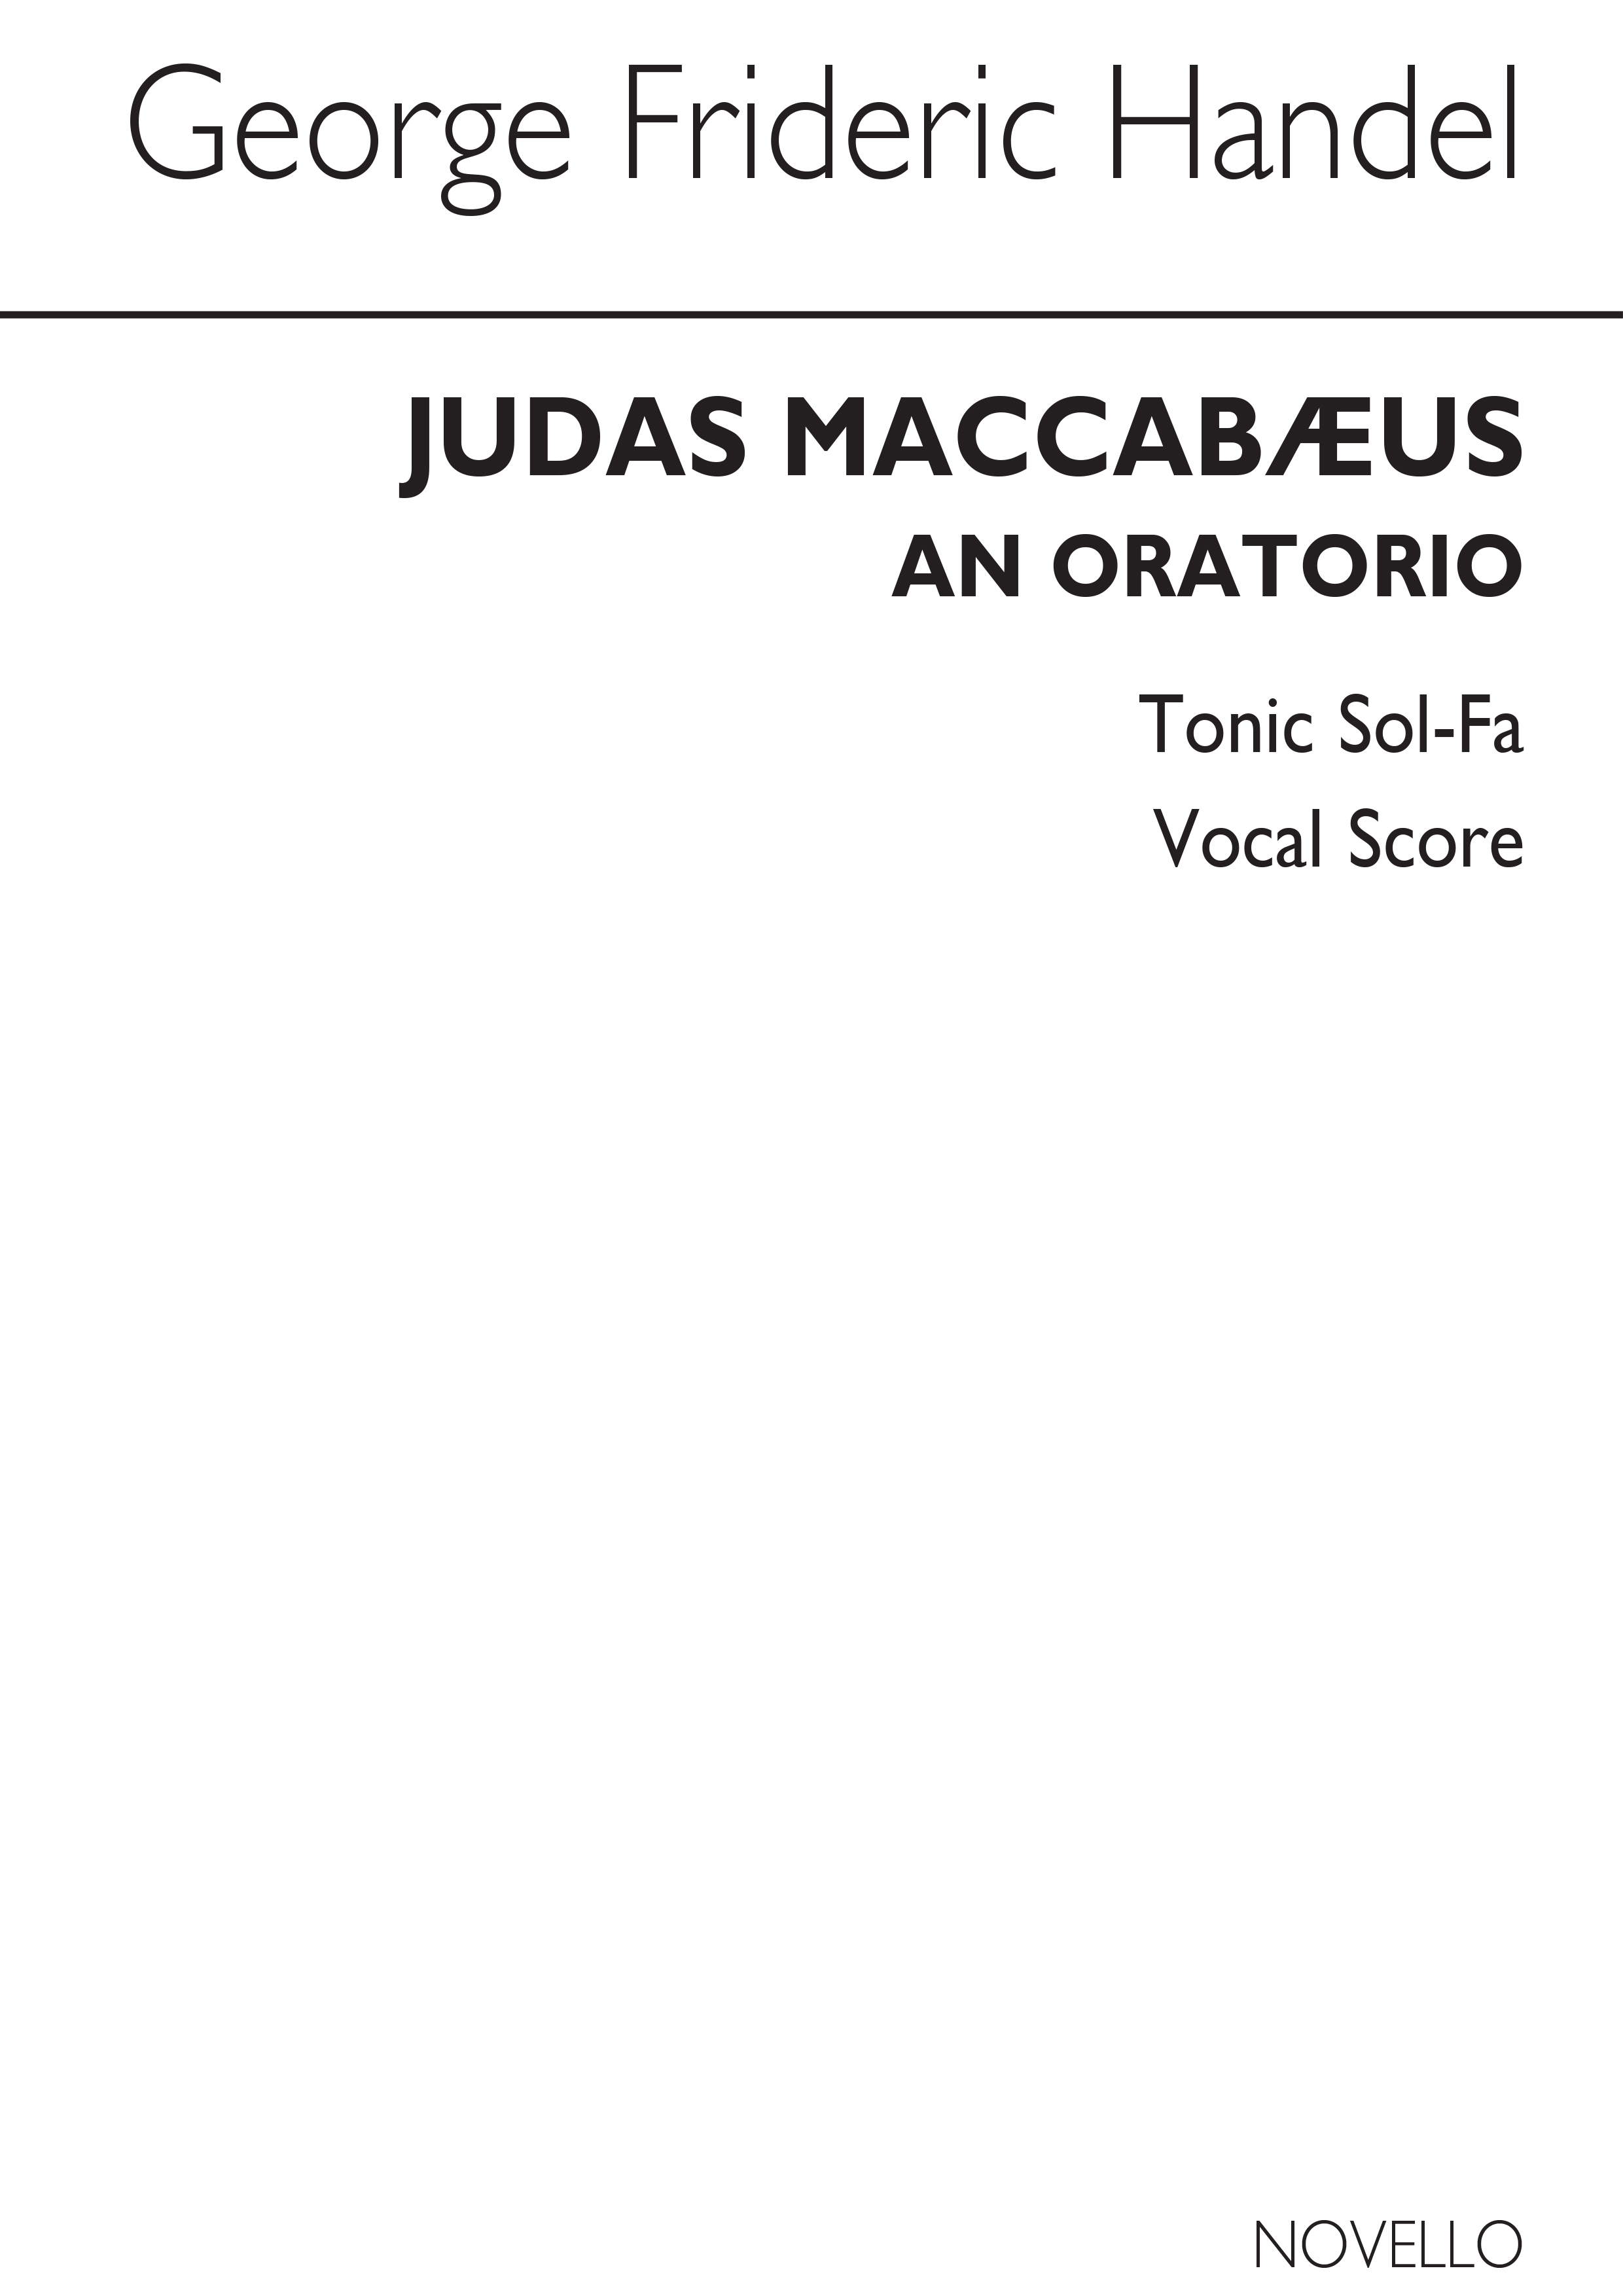 Georg Friedrich Hndel: Judas Maccabaeus - Vocal Score (Tonic Sol-Fa): Vocal: